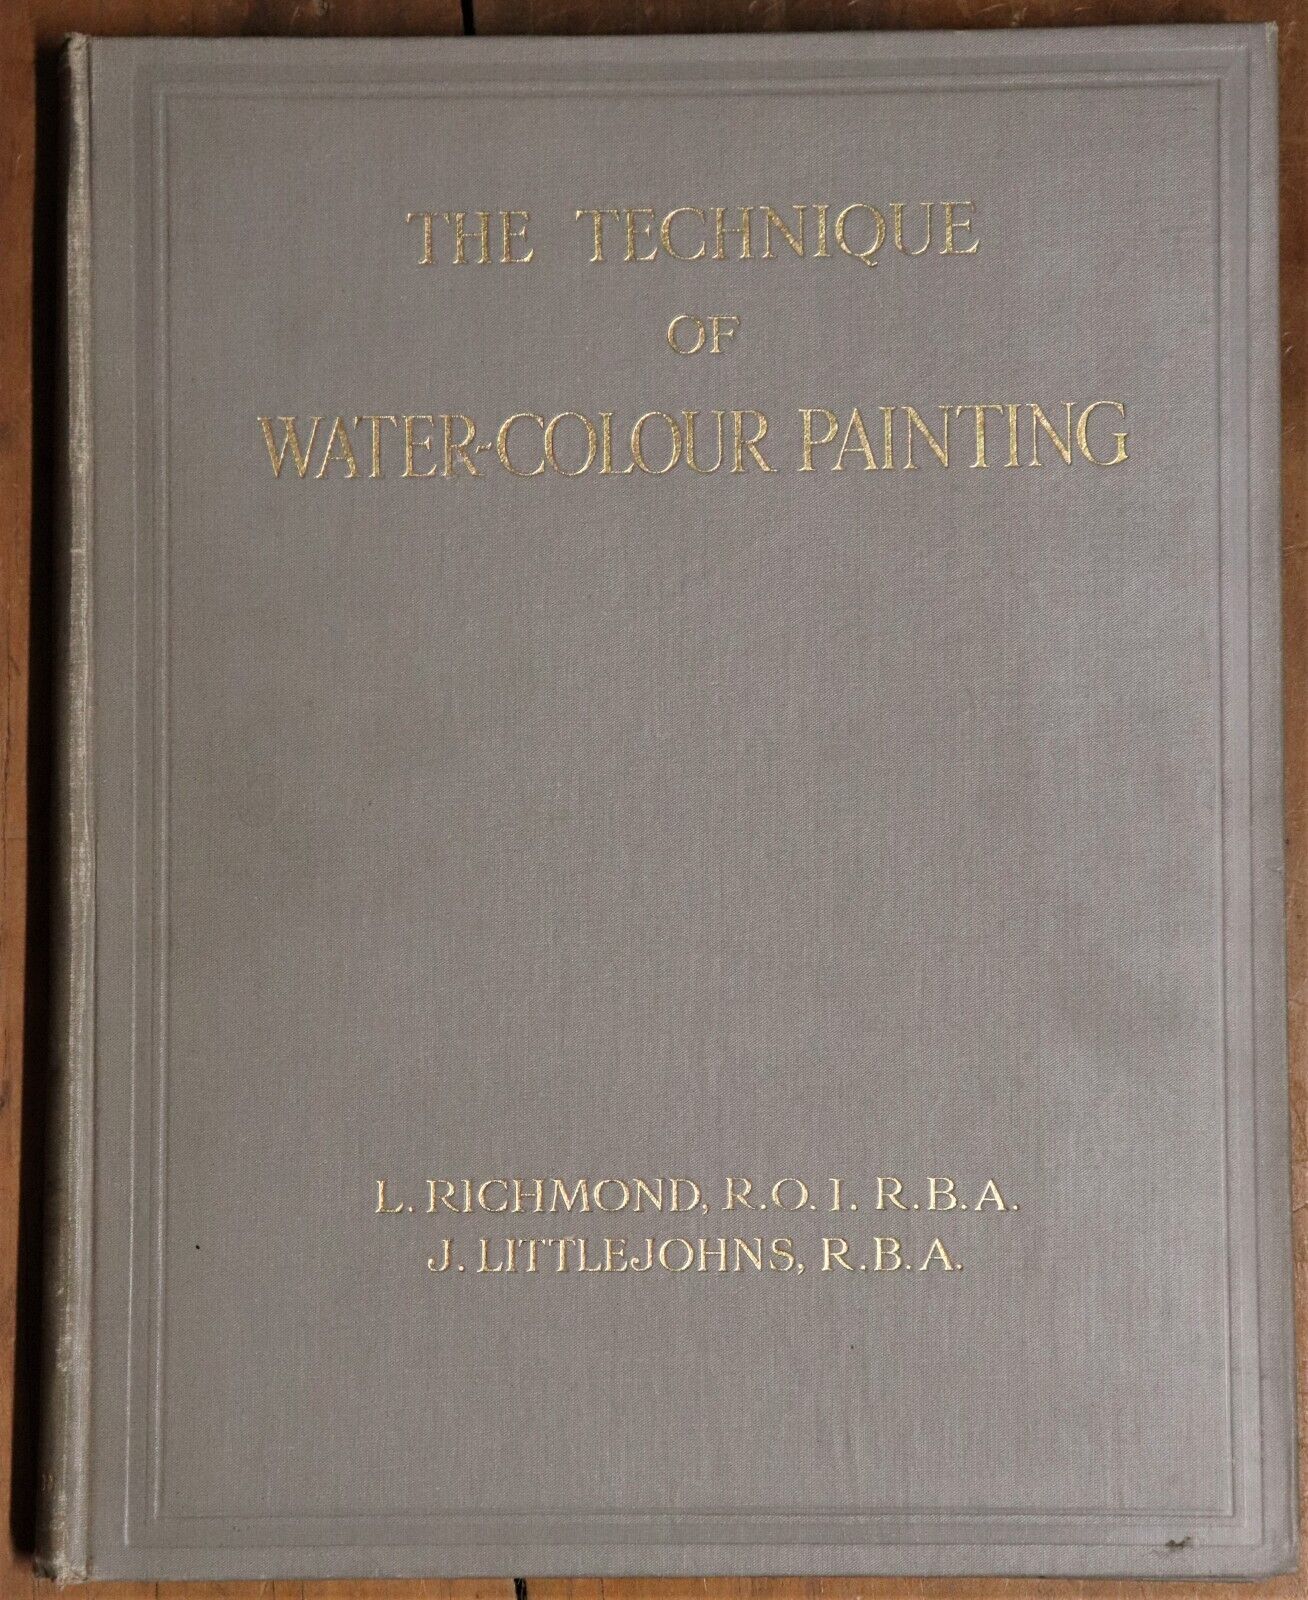 The Technique Of Water-Colour Painting - 1926 - Antique Art Book